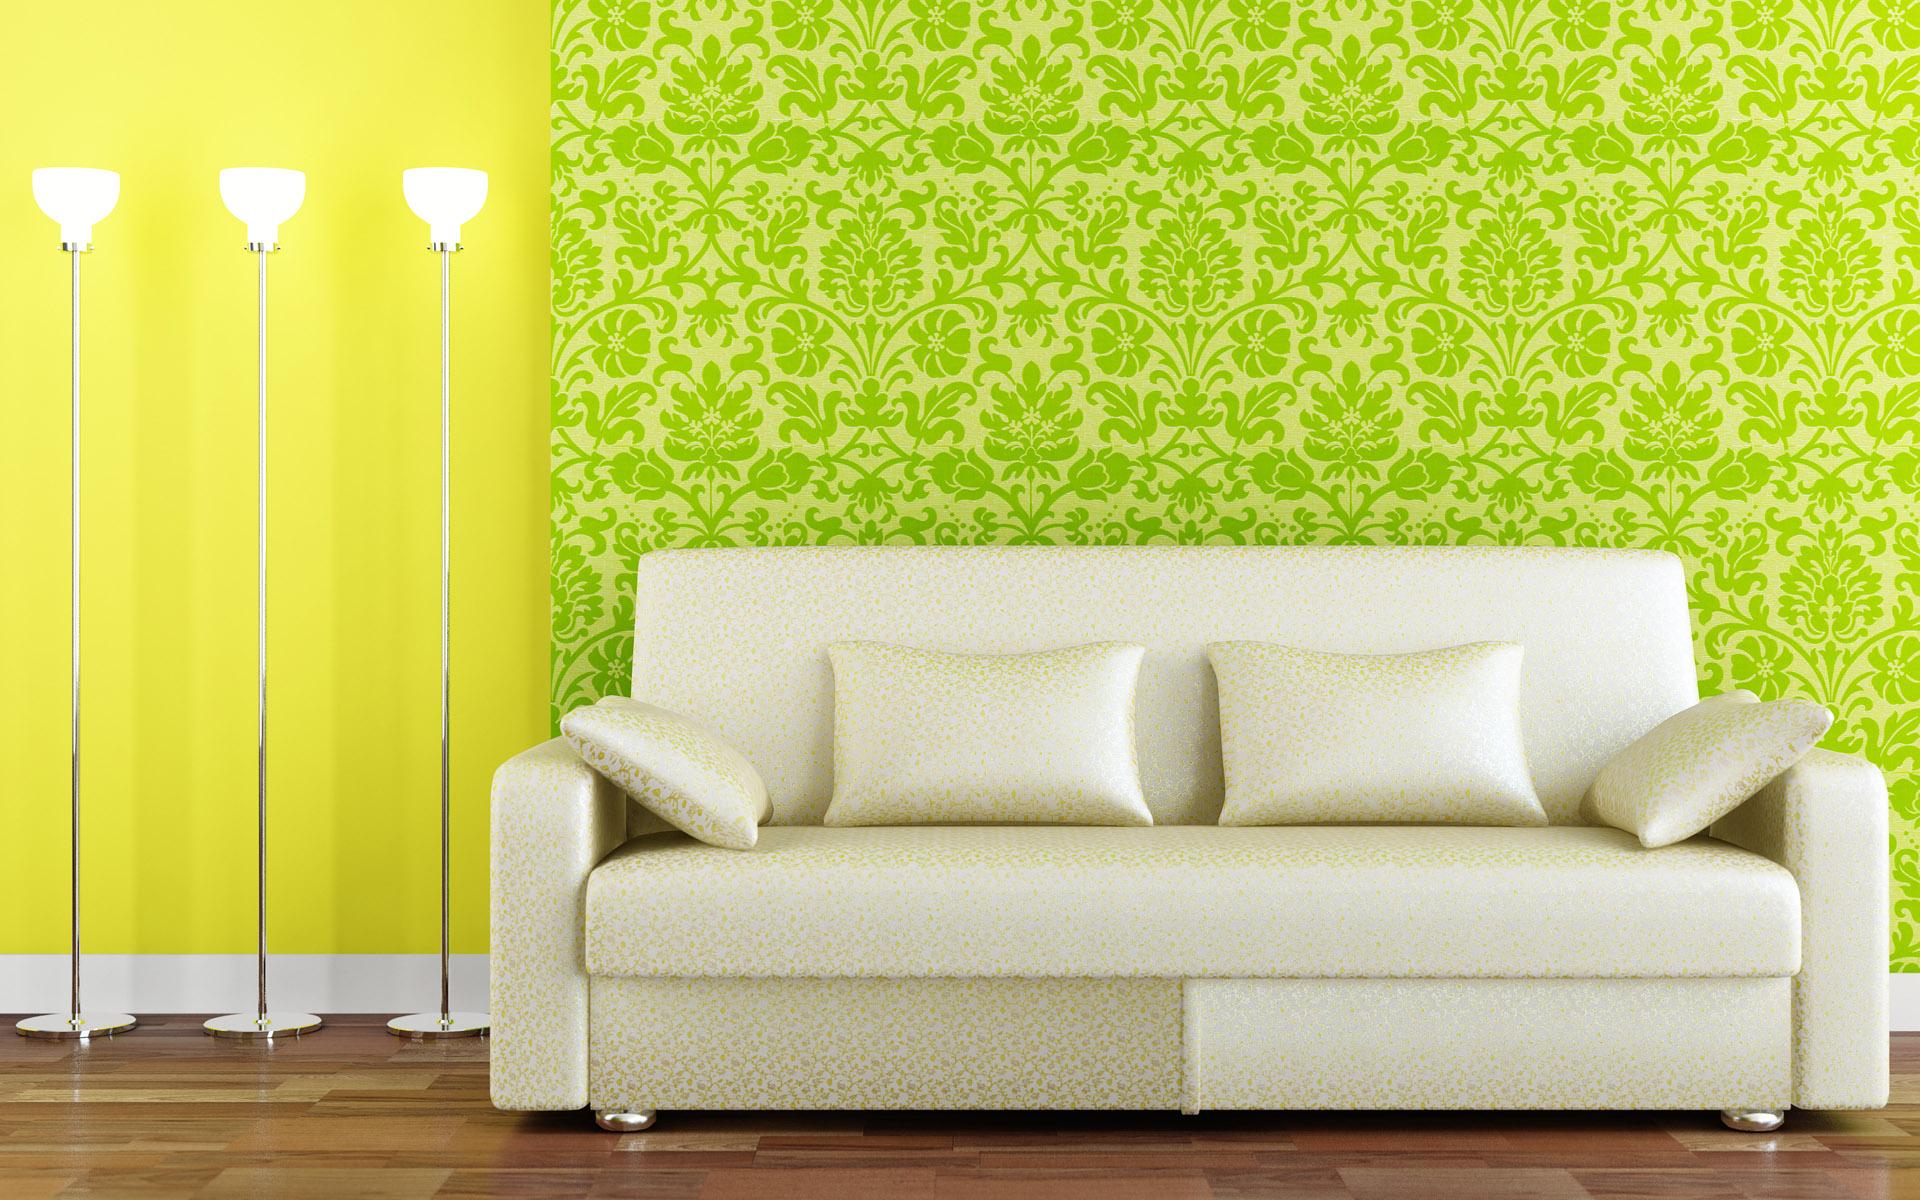  modern wallpapers design and interior home wallpaper   interior design 1920x1200